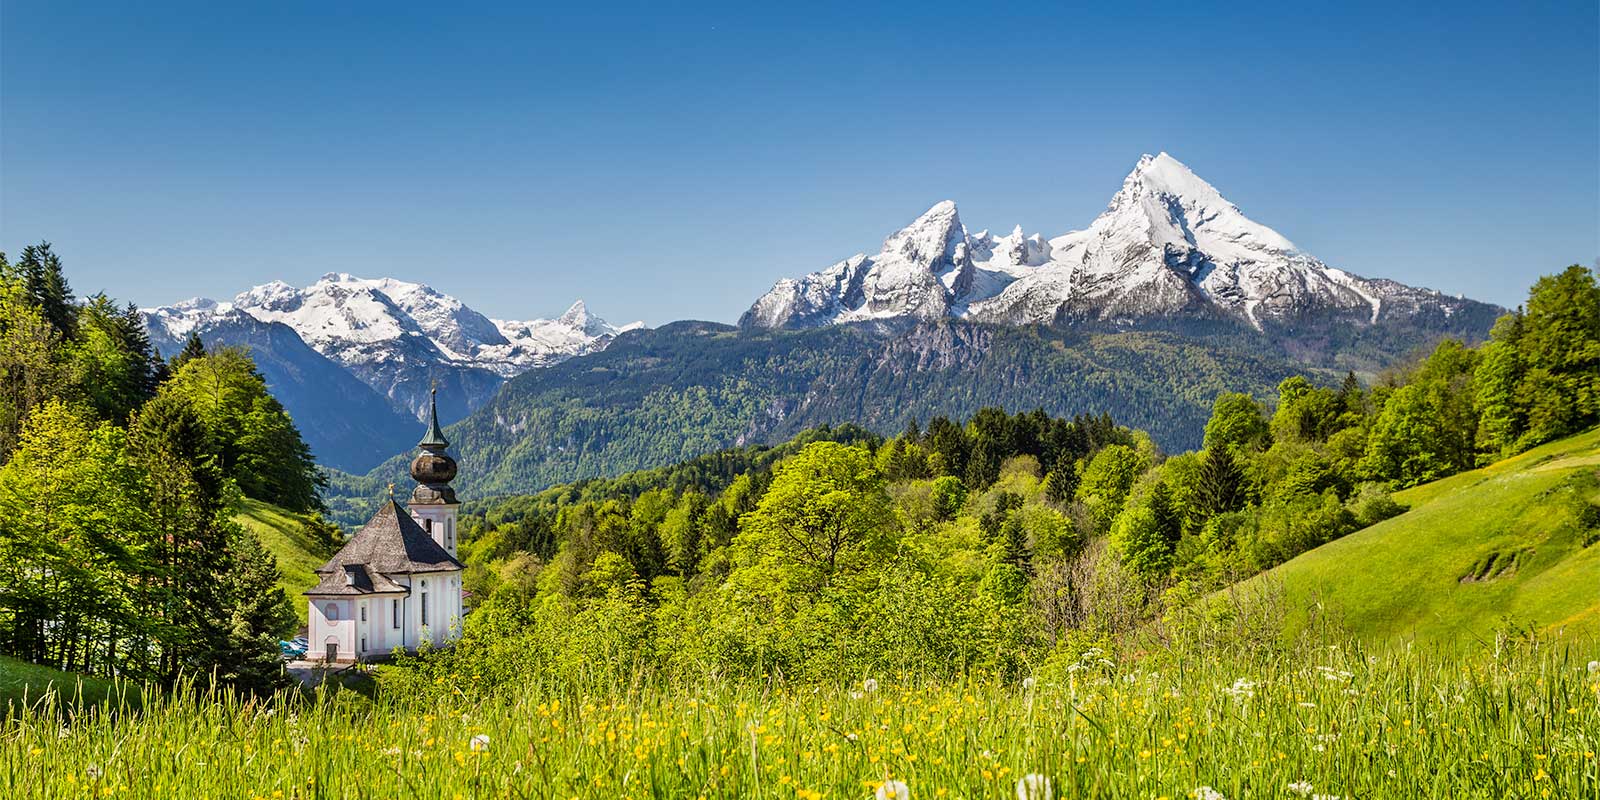 Pilgrimage Church of Maria Gern and Watzmann Massif in the Bavarian Alps, Germany